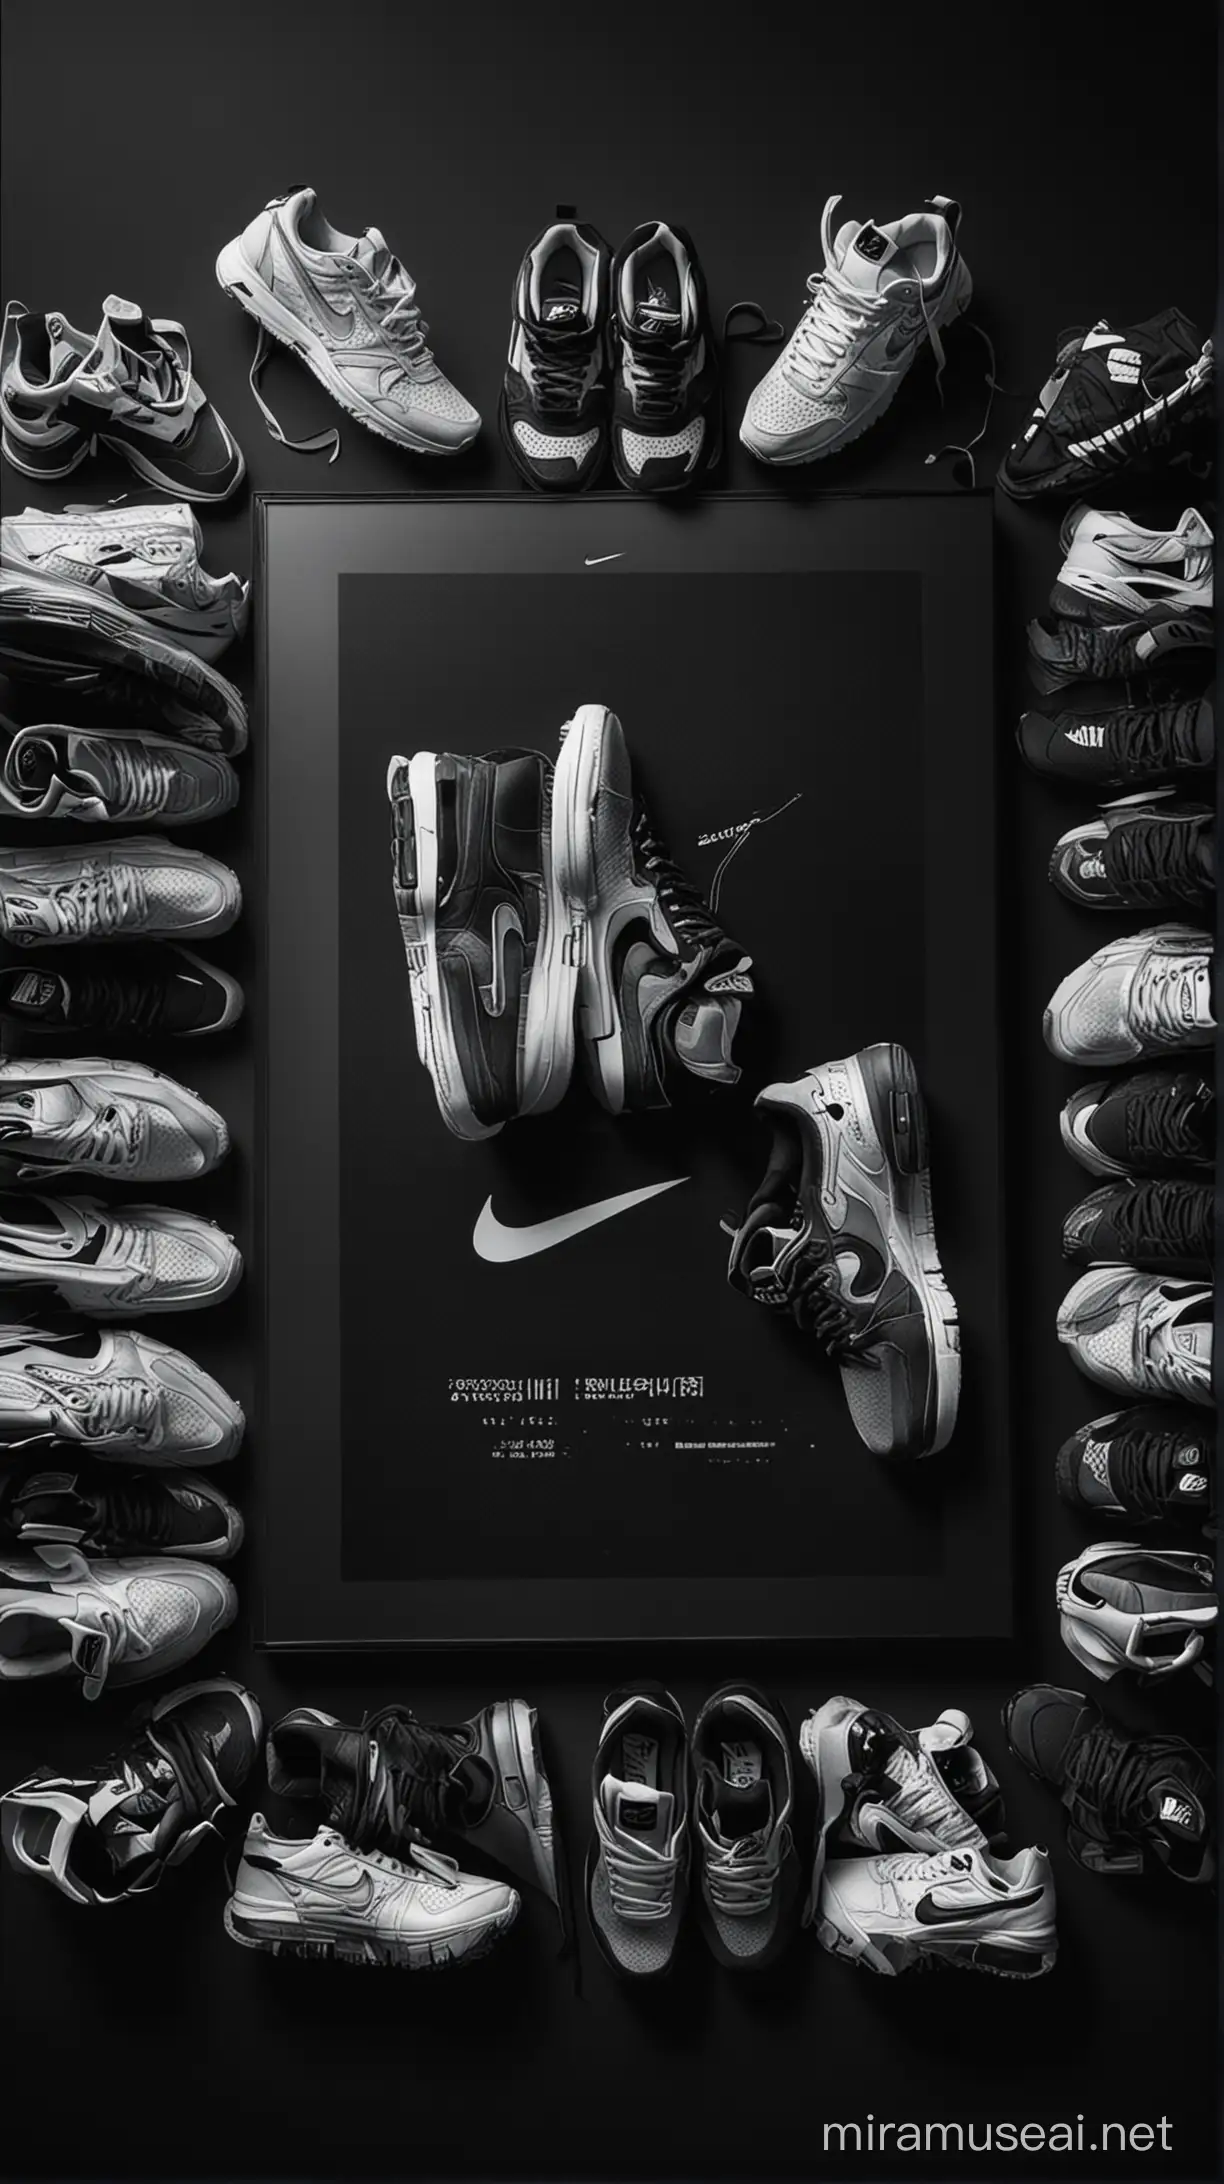 Monochrome Nike Sneakers on Black Background